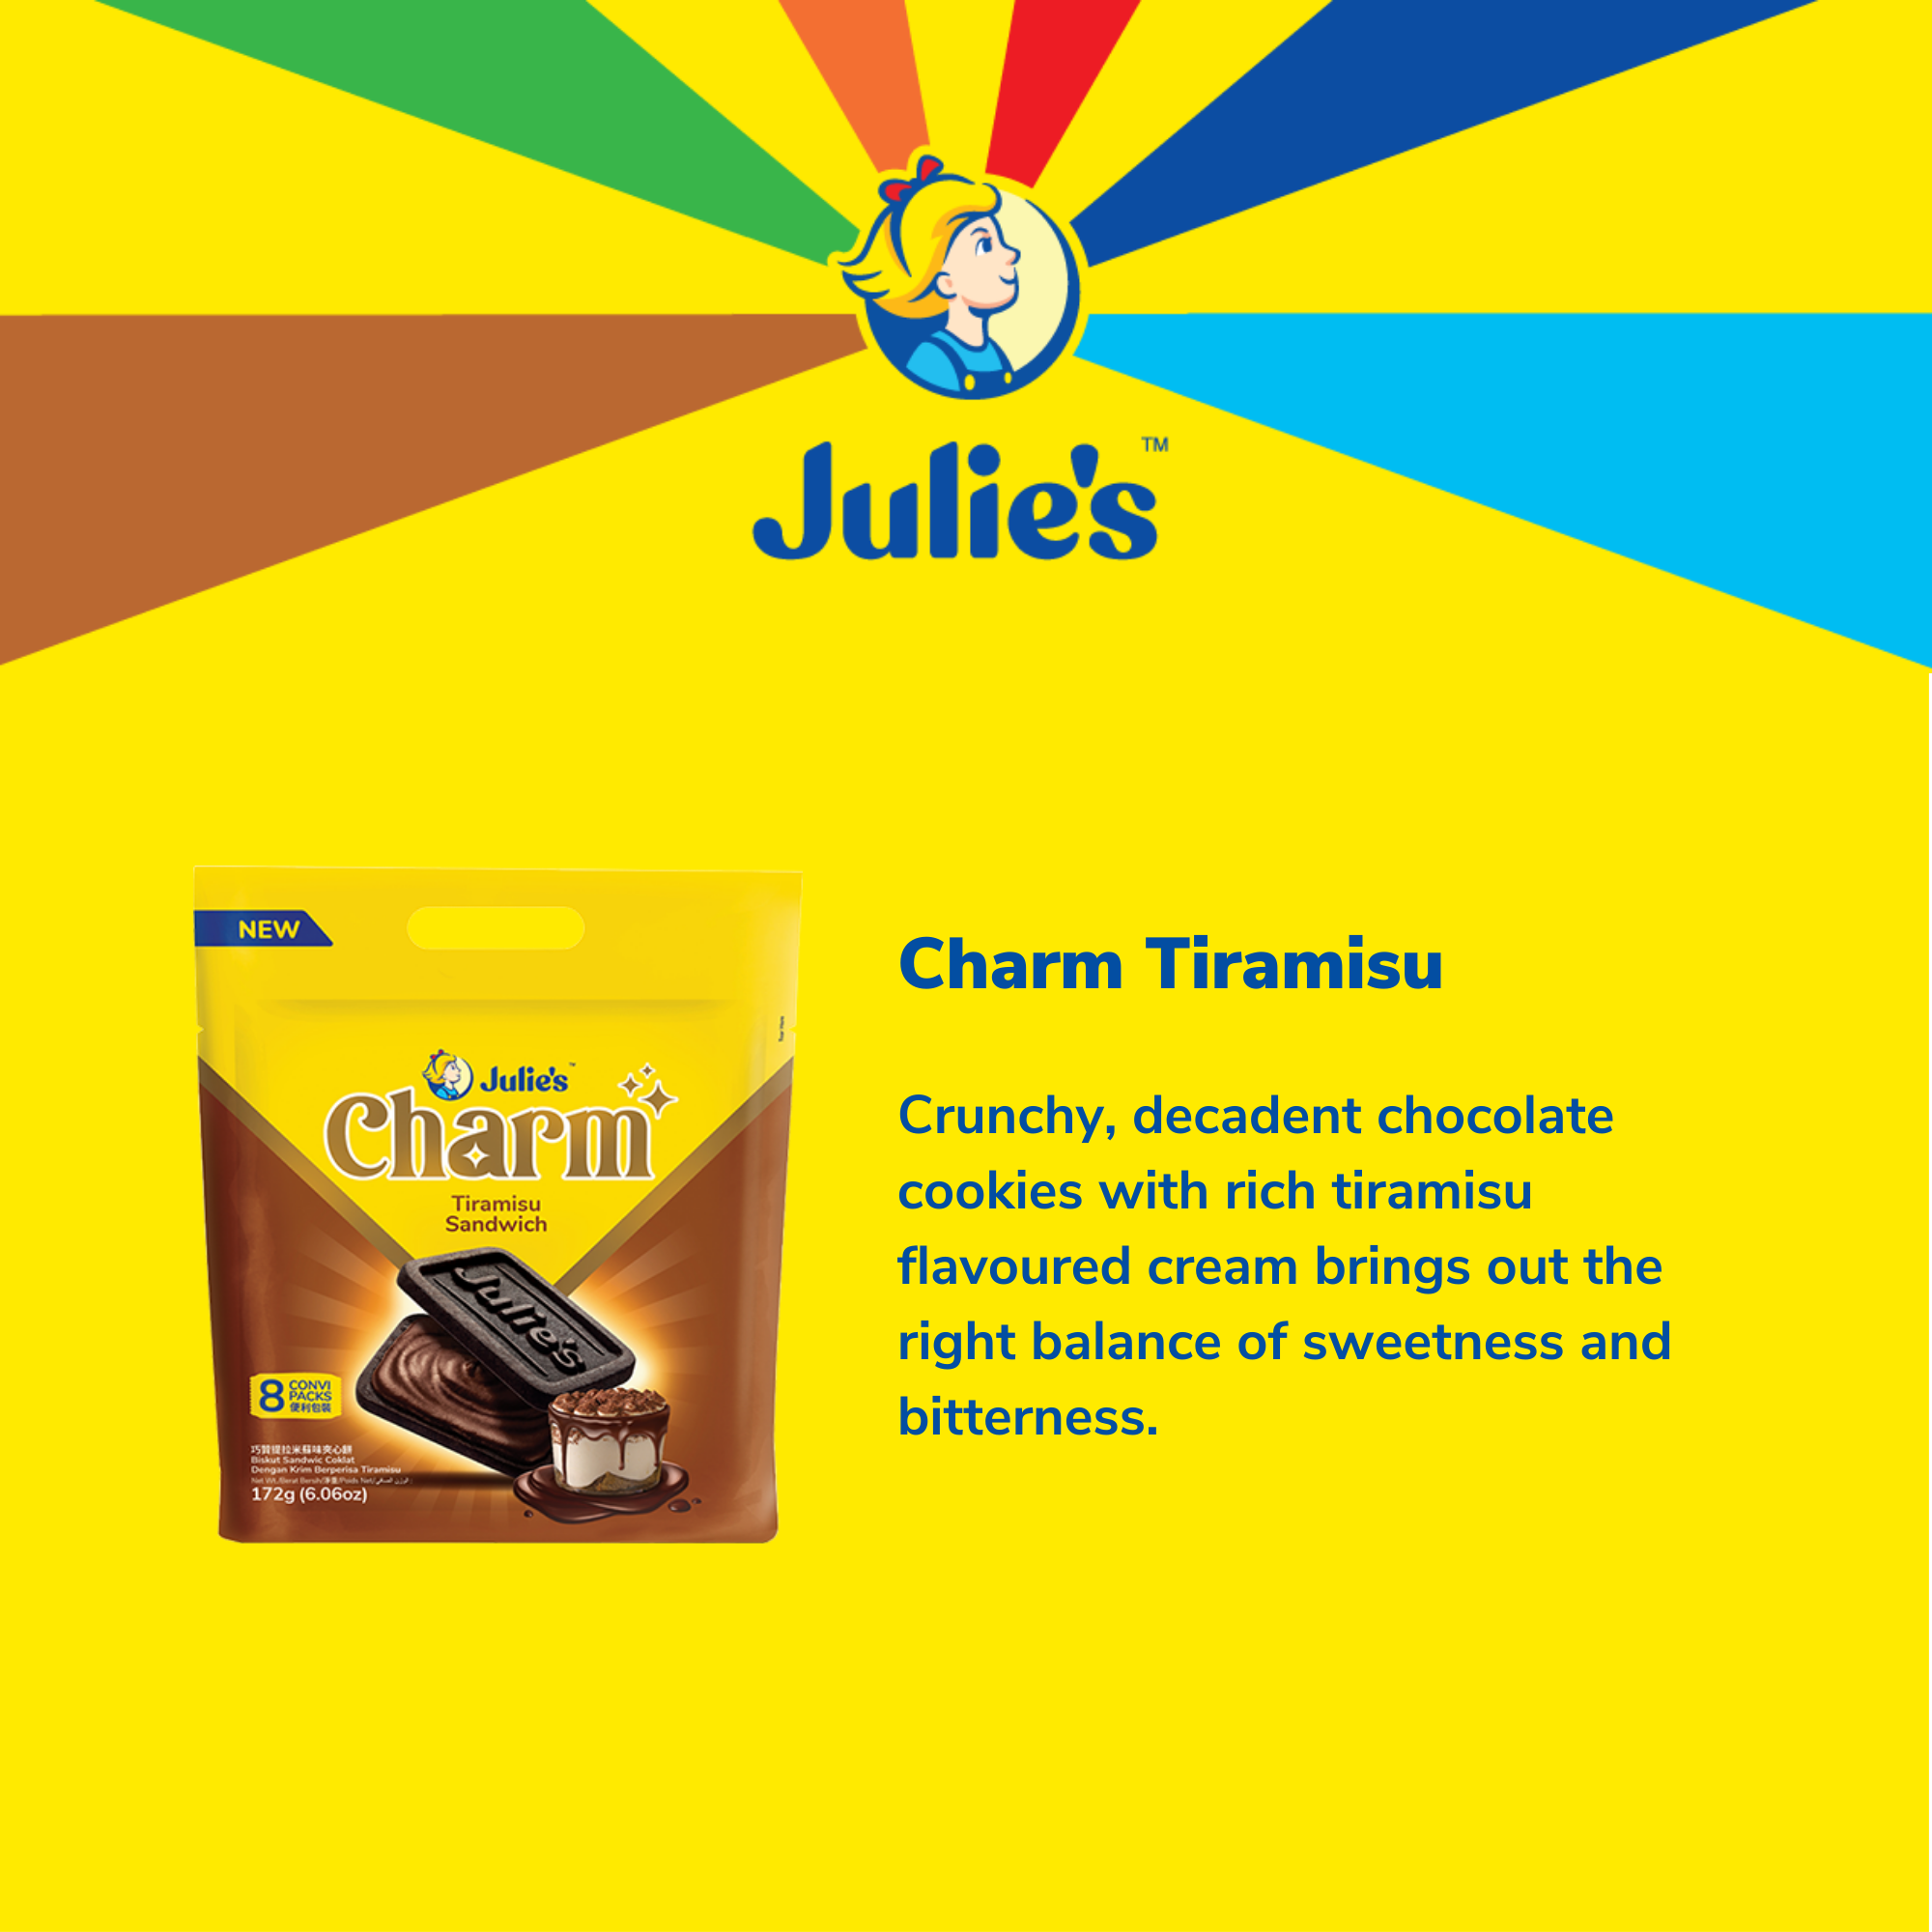 Julie's Charm Tiramisu Sandwich 172g x 6 packs